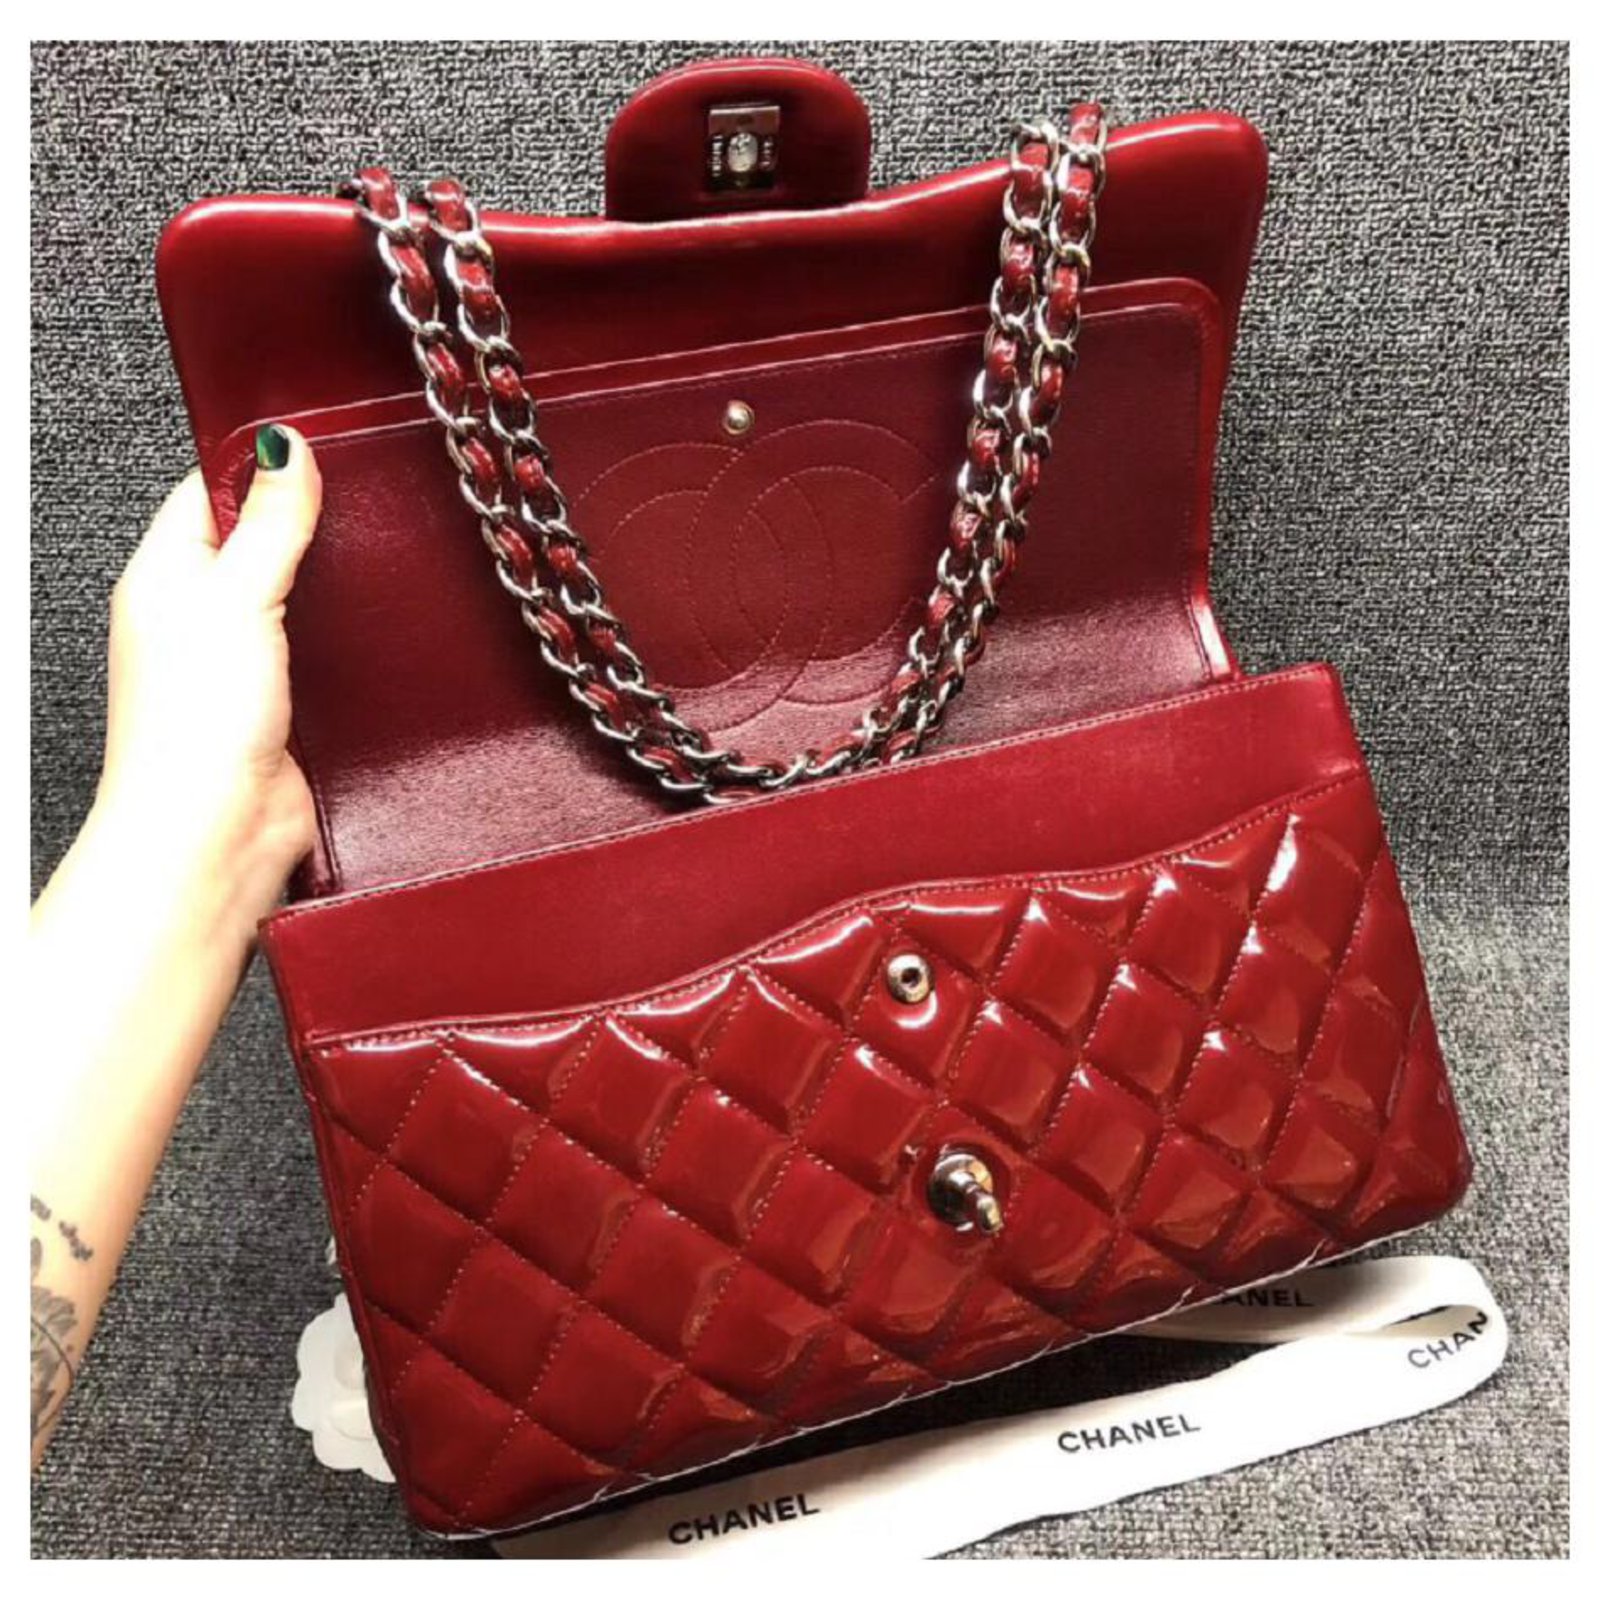 Chanel Patent Red Jumbo classic flap bag